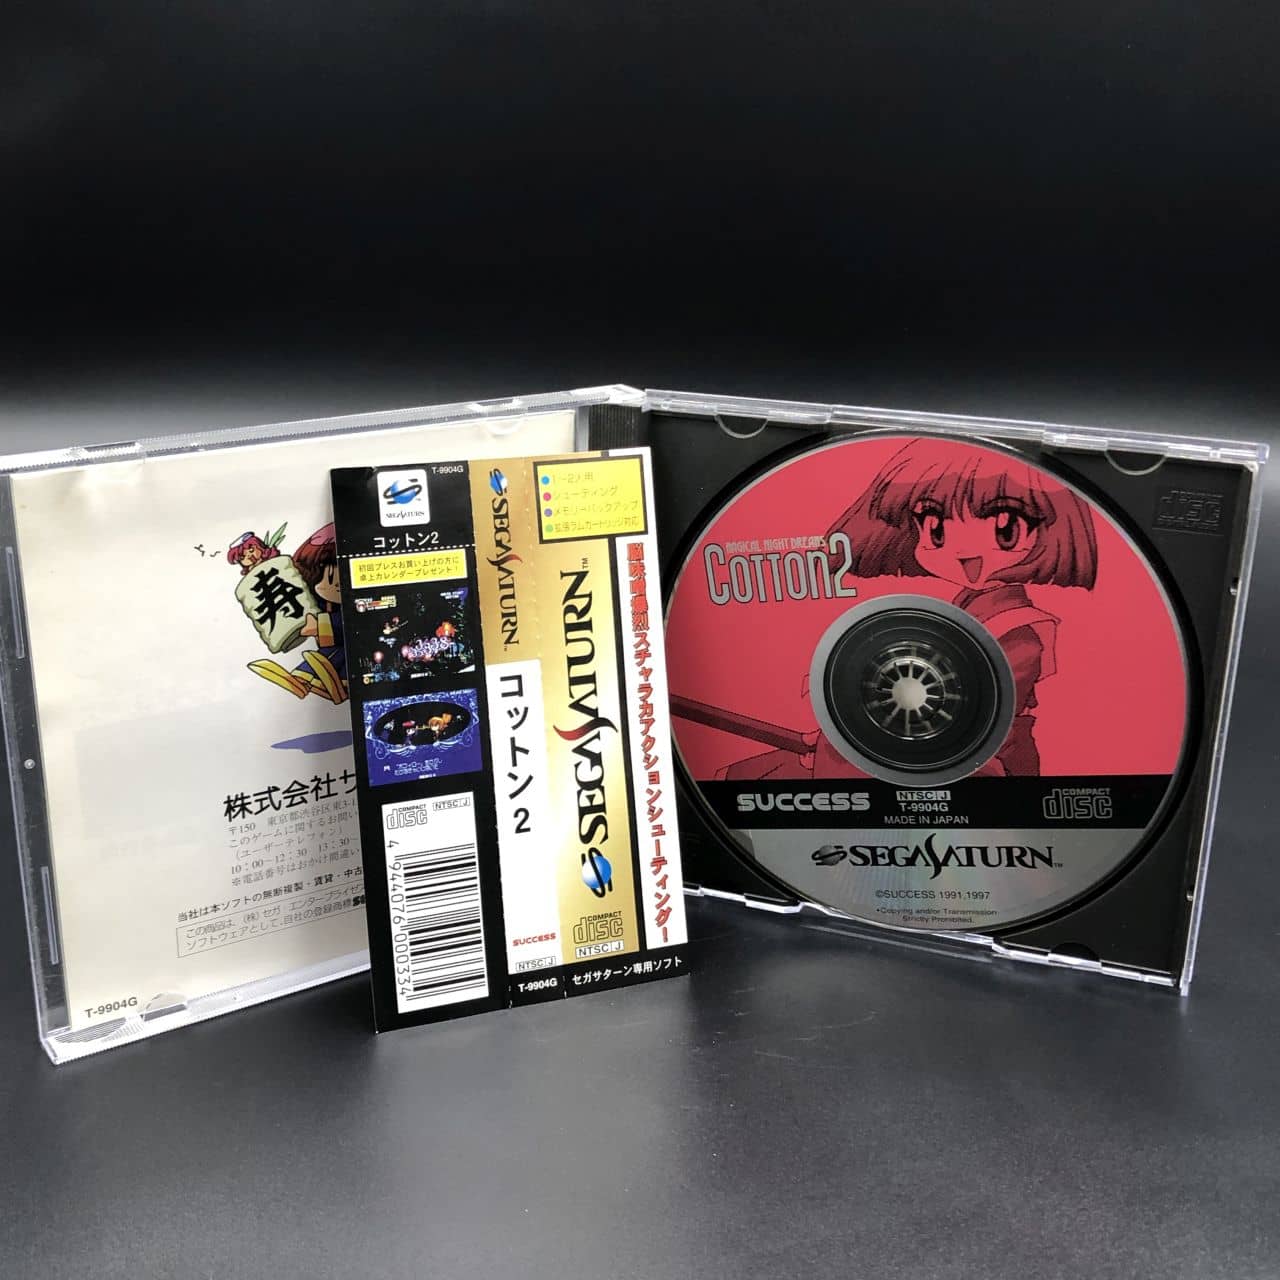 Cotton 2 - Magical Night Dreams (Import Japan) (mit Spine, ohne Reg. Card) (Sehr gut) Sega Saturn